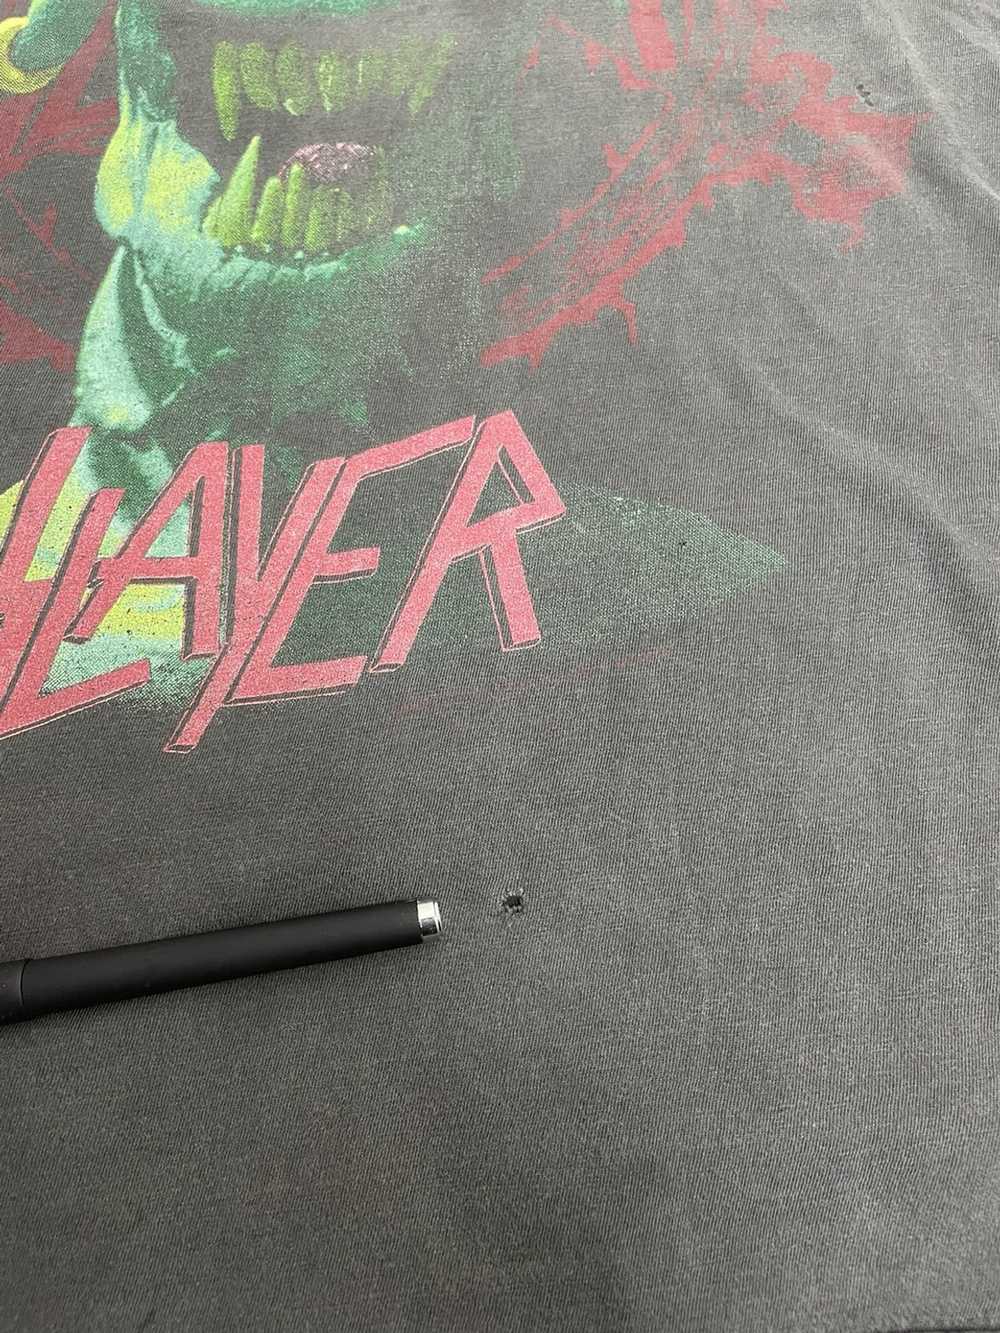 Slayer Vintage slayer band tee 1991 - image 7